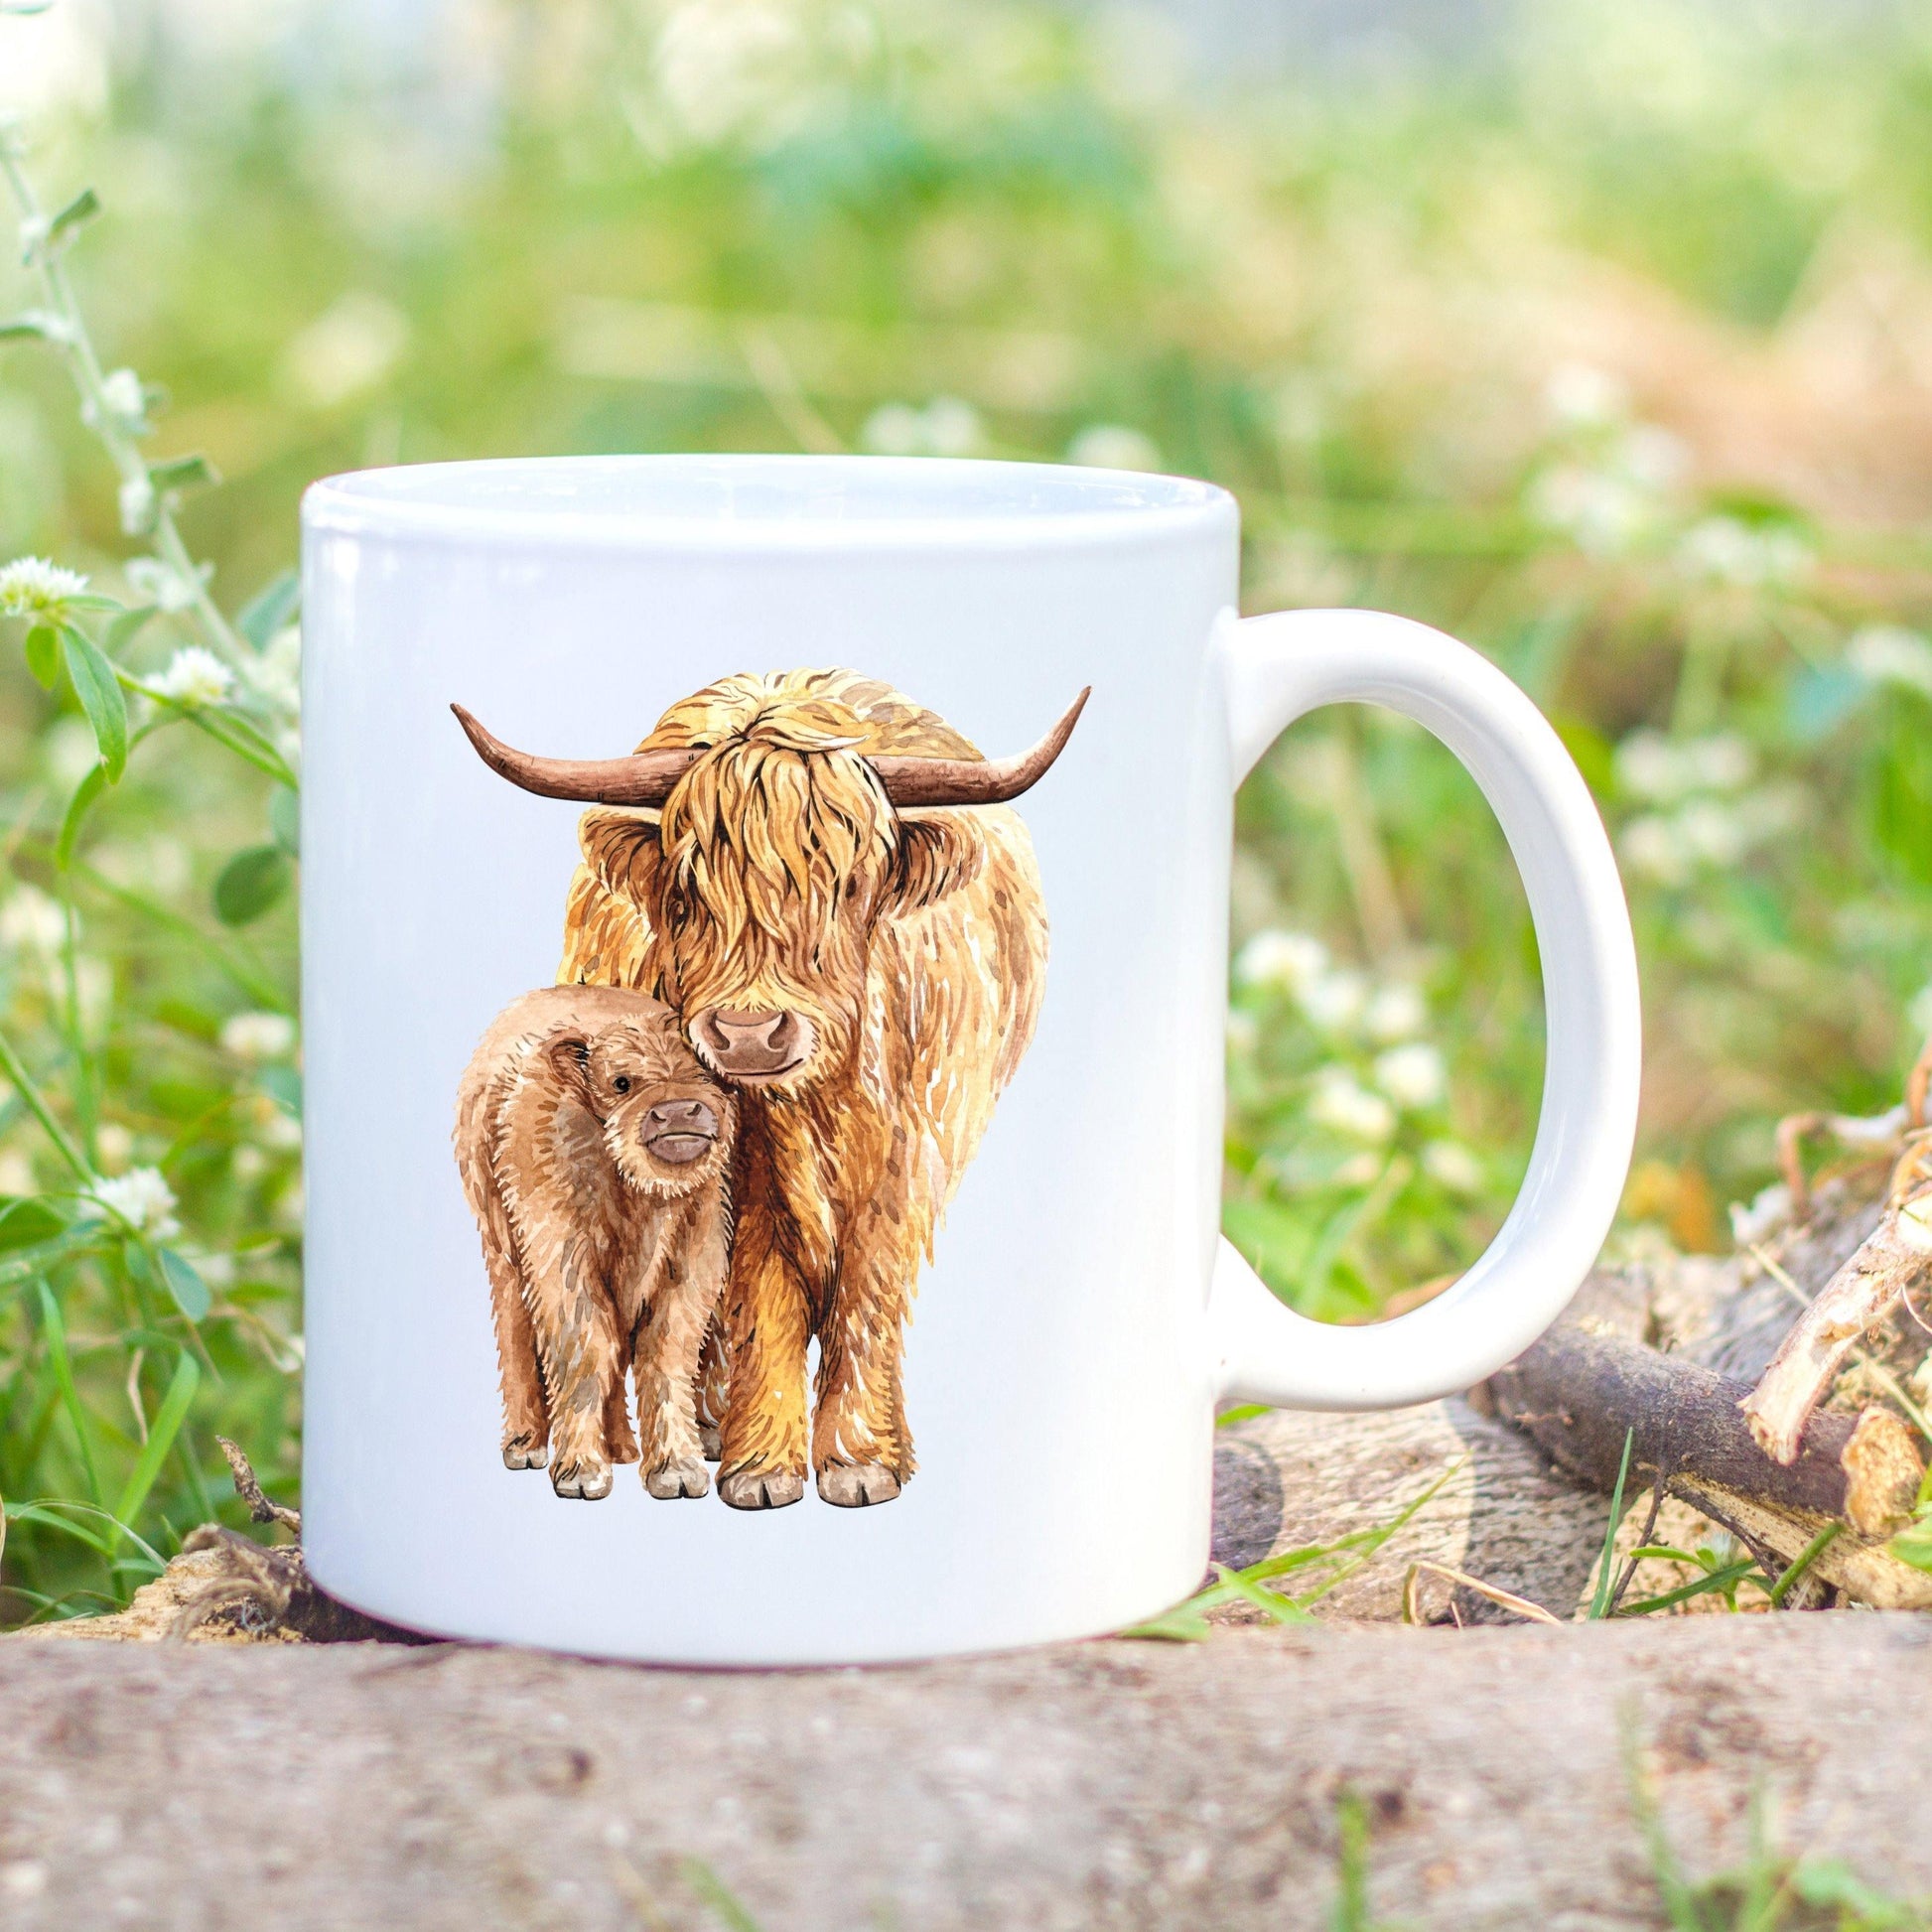 Highland cow mug - Sew Tilley